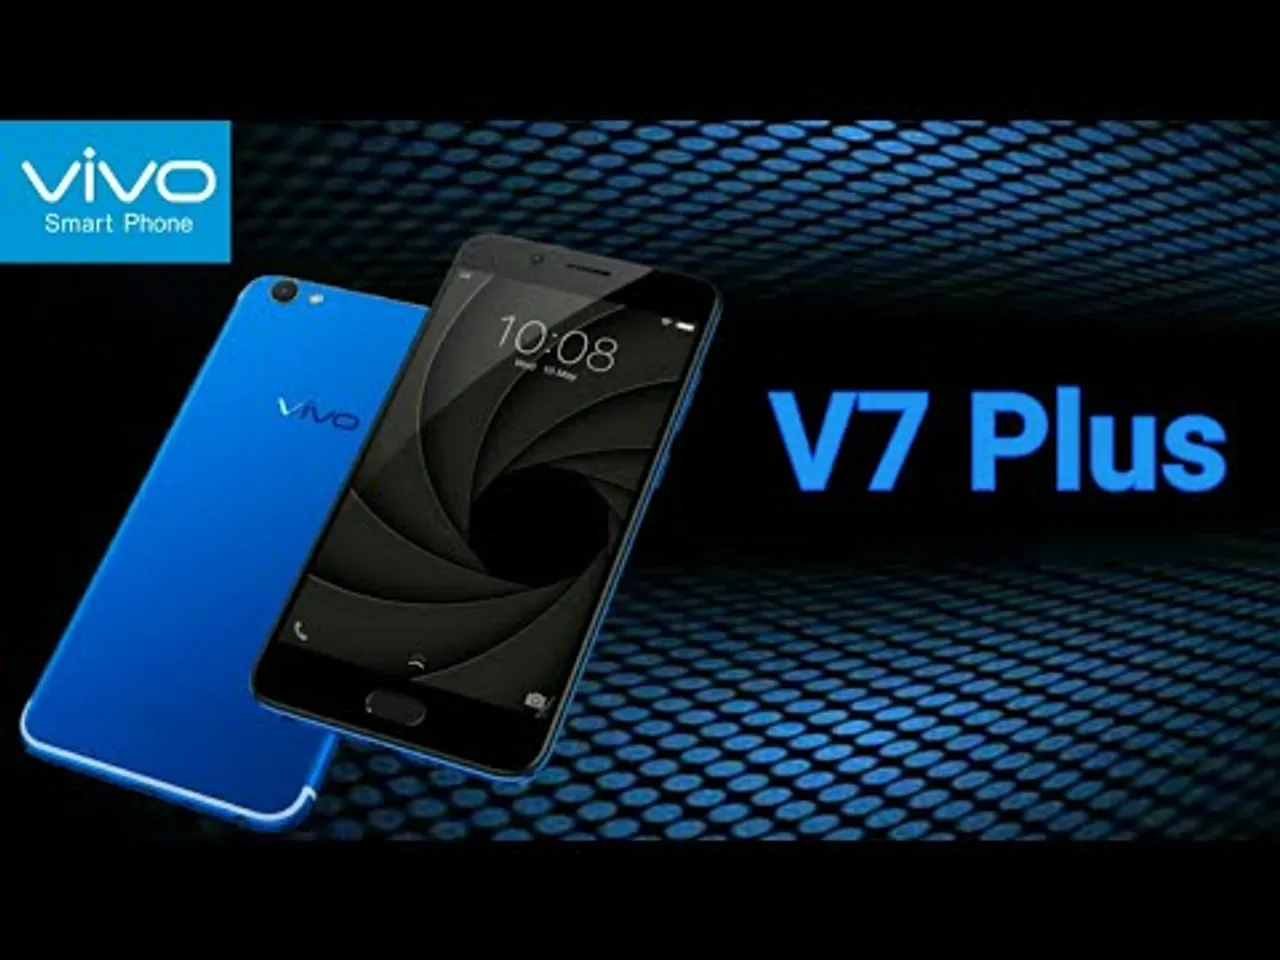 ViVo is all set to launch - Vivo V7 and V7 plus